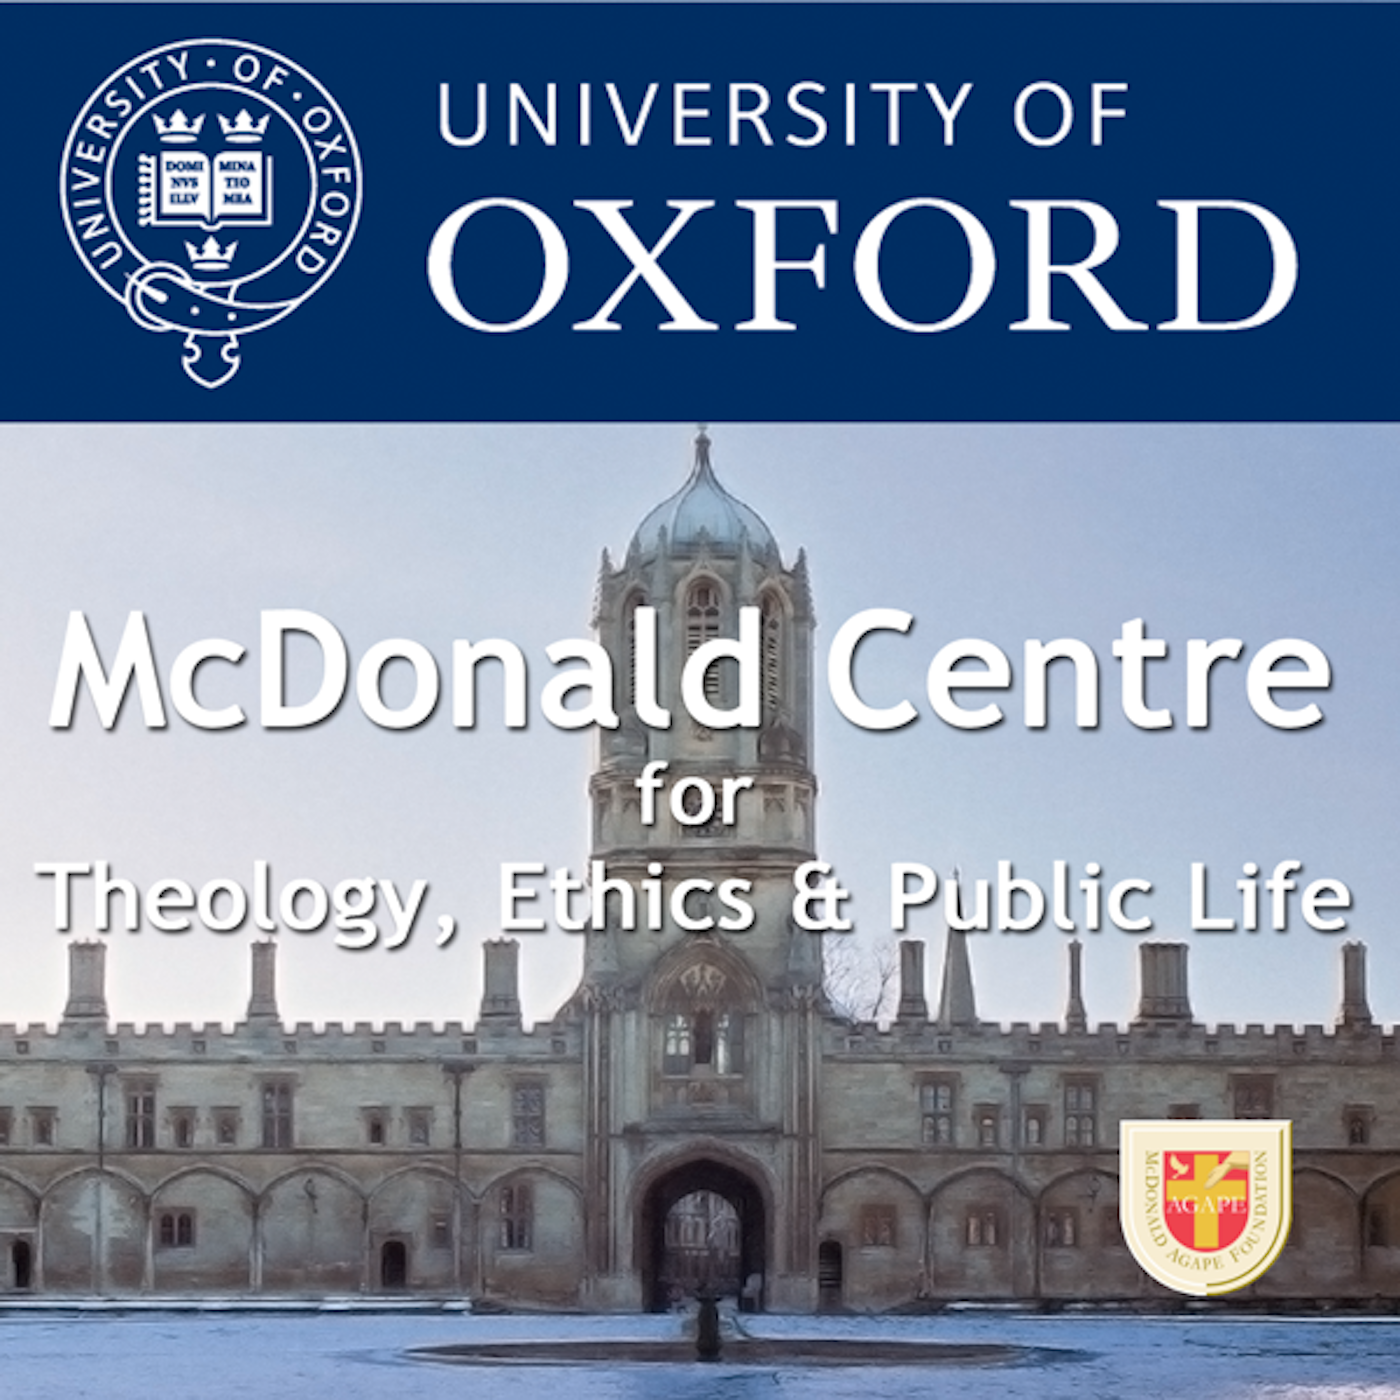 McDonald Centre for Theology, Ethics & Public Life